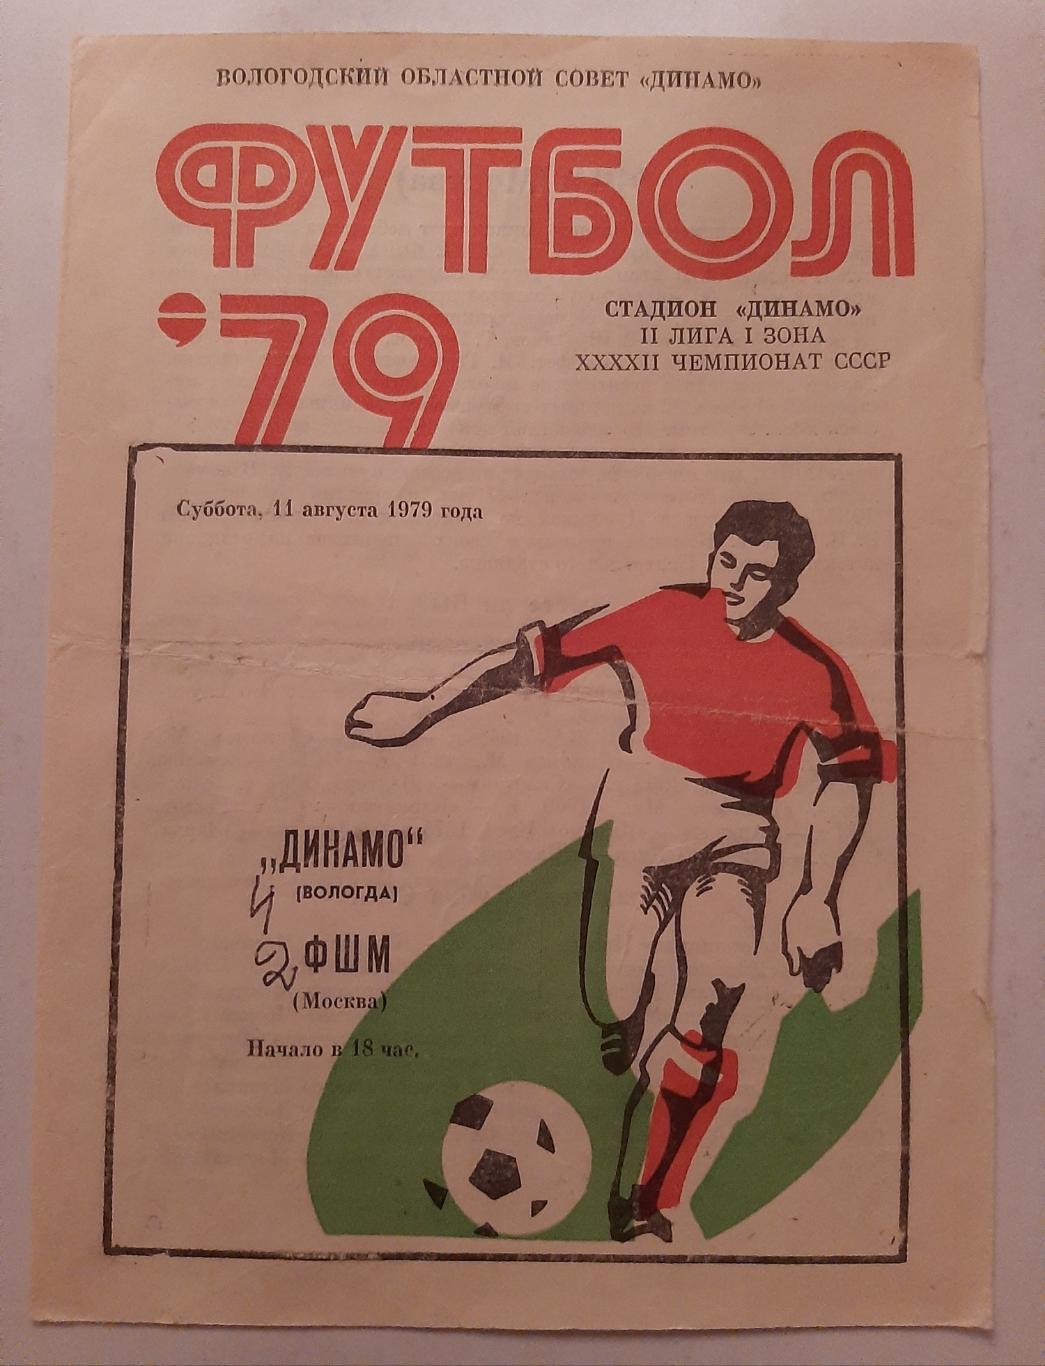 Динамо Вологда - ФШМ Москва 11.08.1979